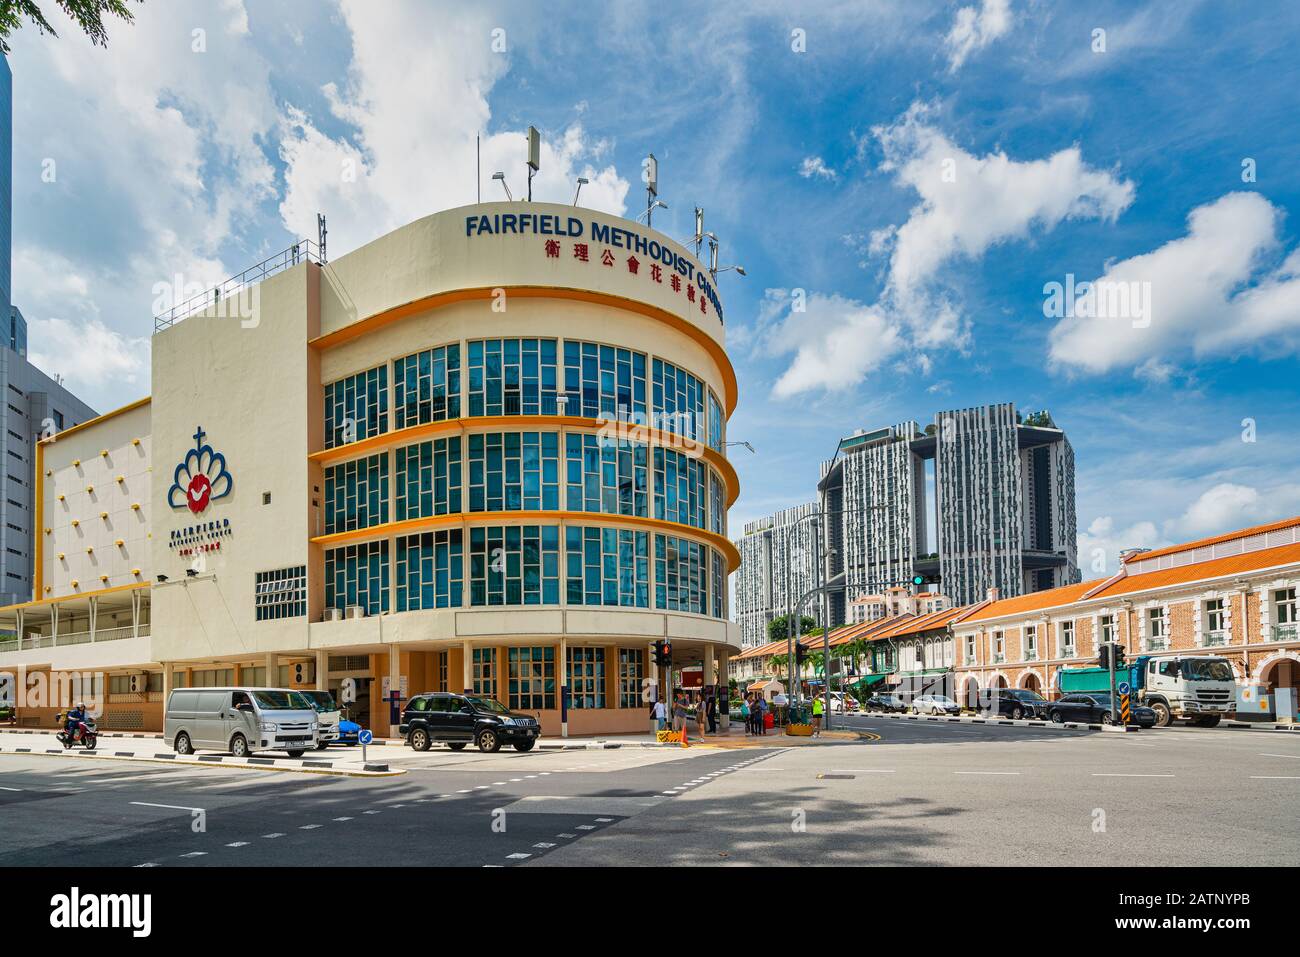 Singapur. Enero de 2020. Edificio de fachada de la Iglesia Metodista de Fairfield Foto de stock